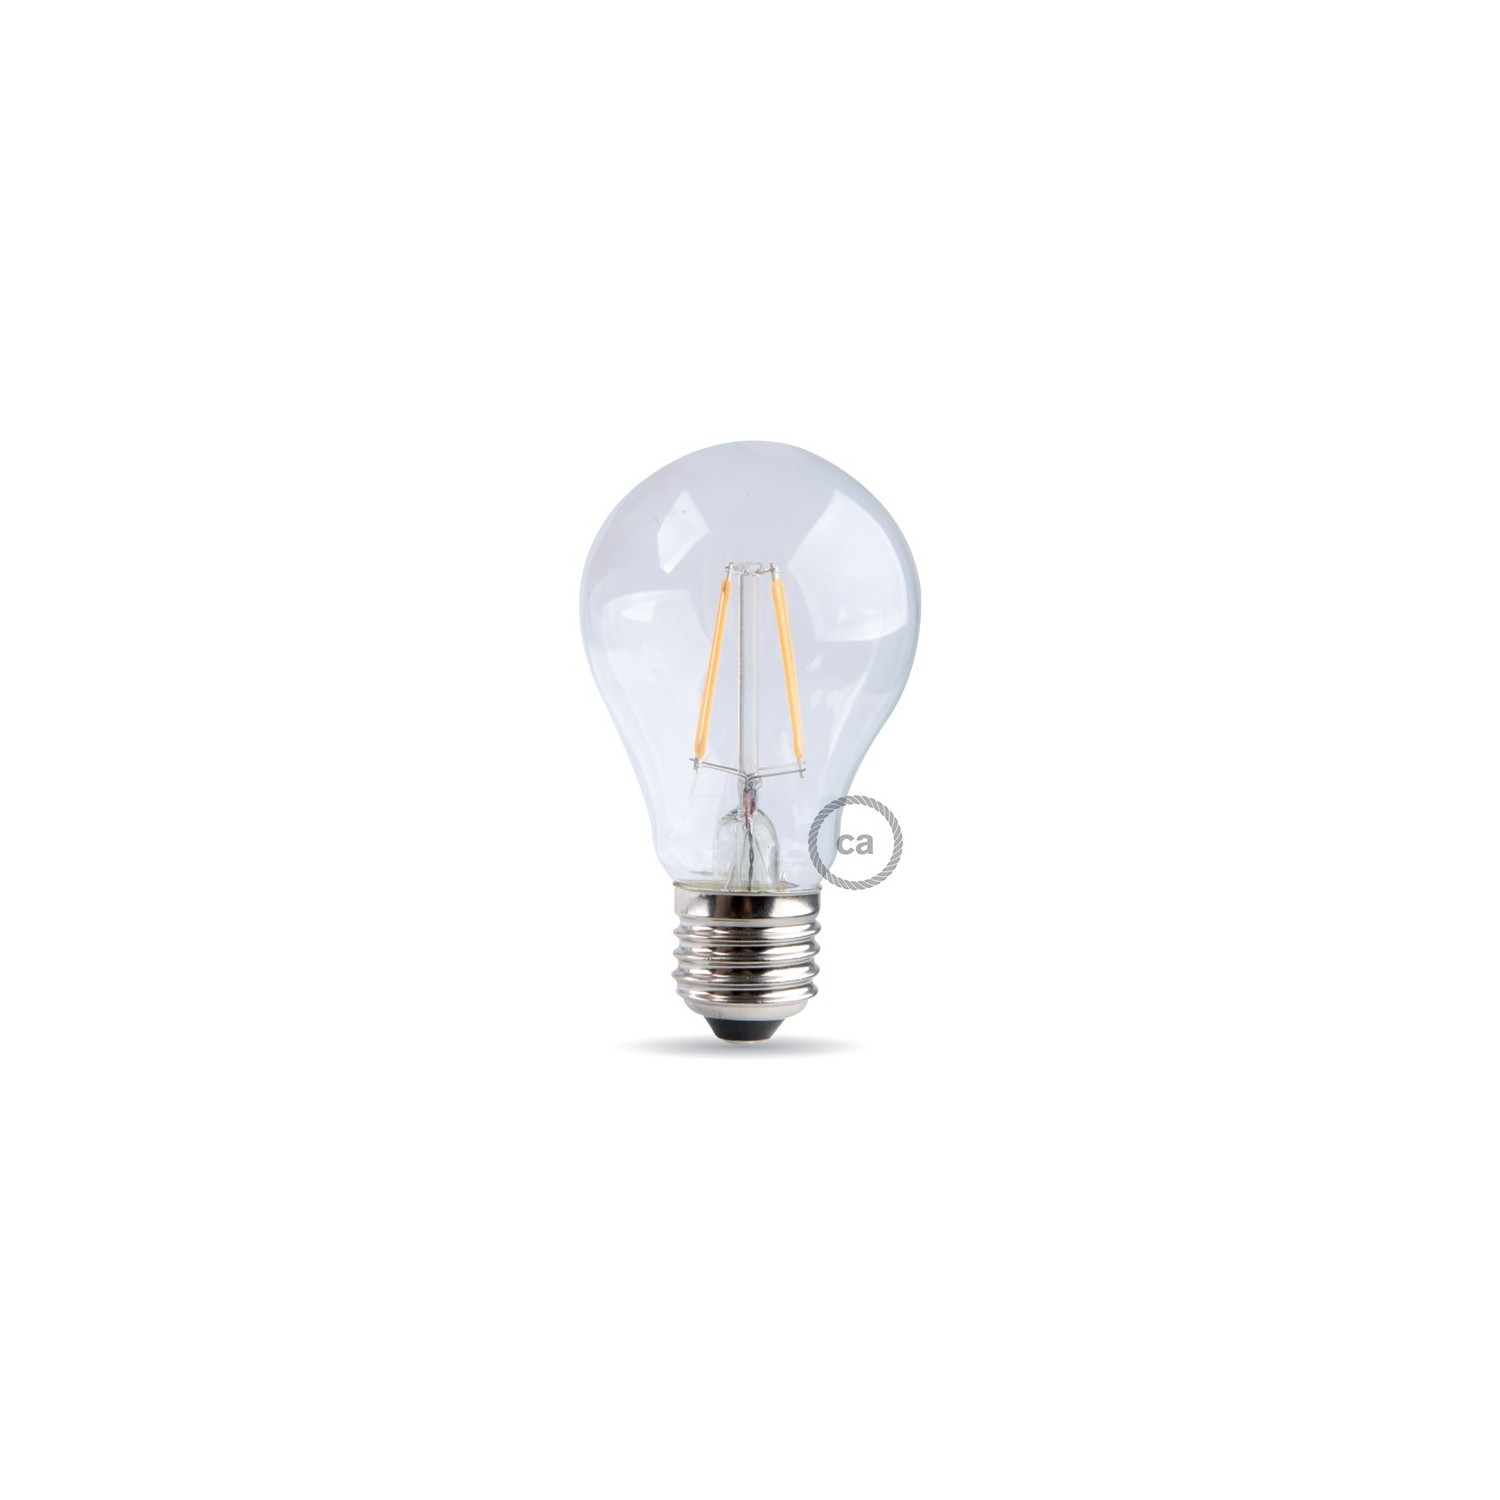 Houten tafellamp met Impero lampenkap - Alzaluce Wood